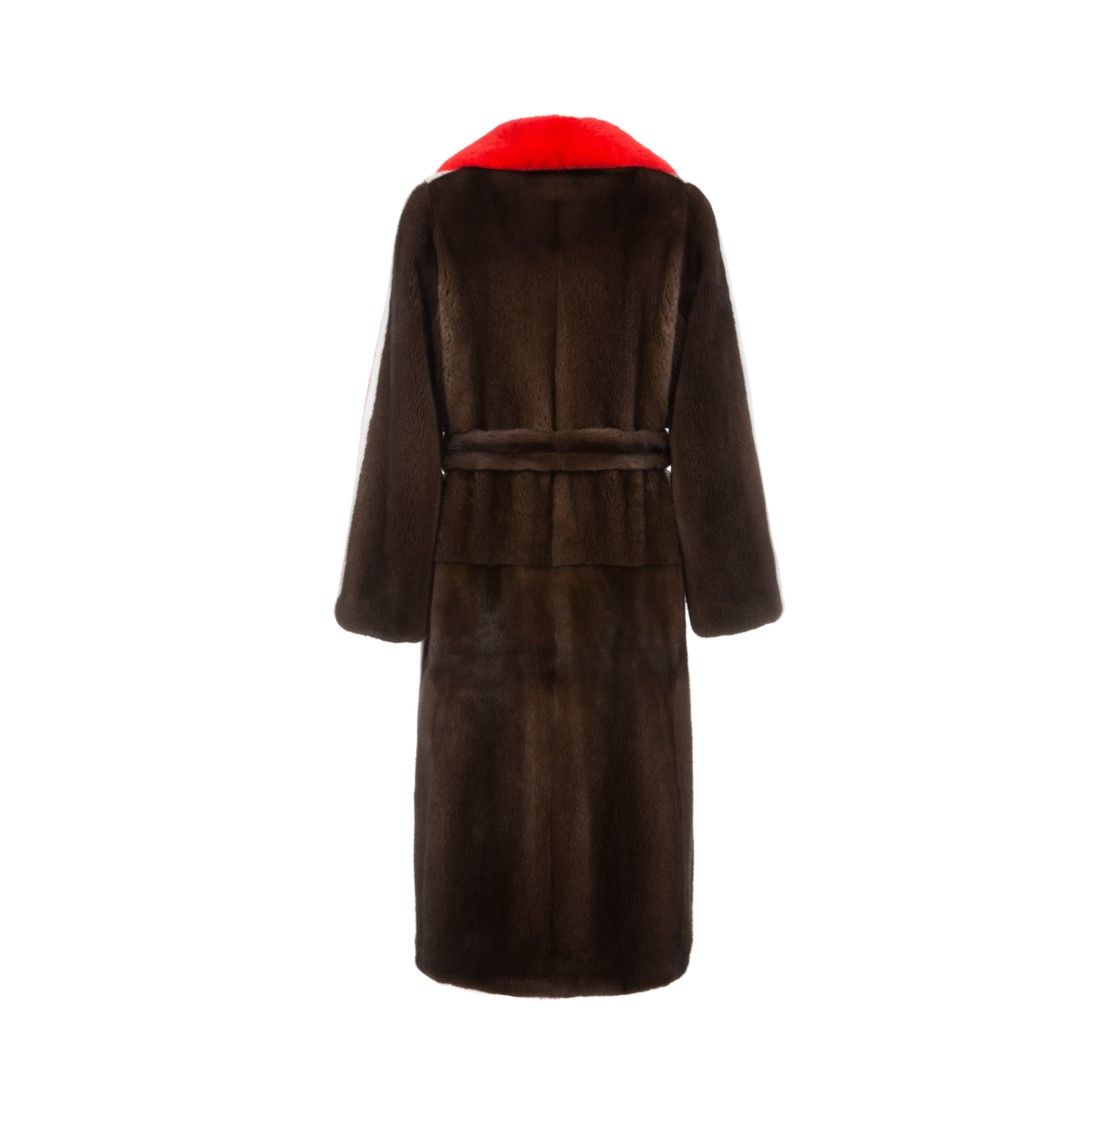 Gucci Mink Fur Coat in Brown